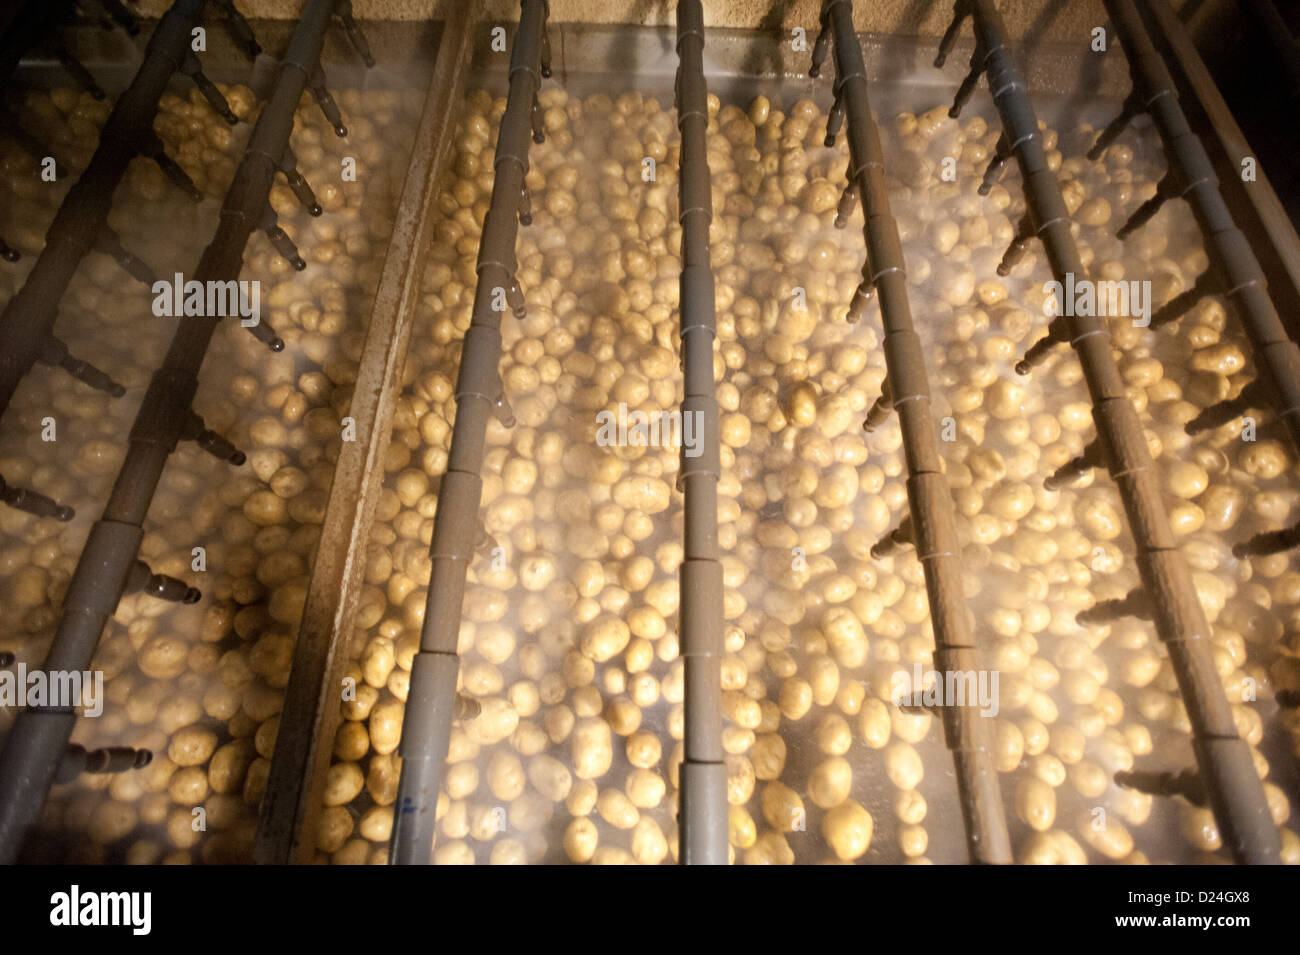 Potatoes on a potato farm  Stock Photo